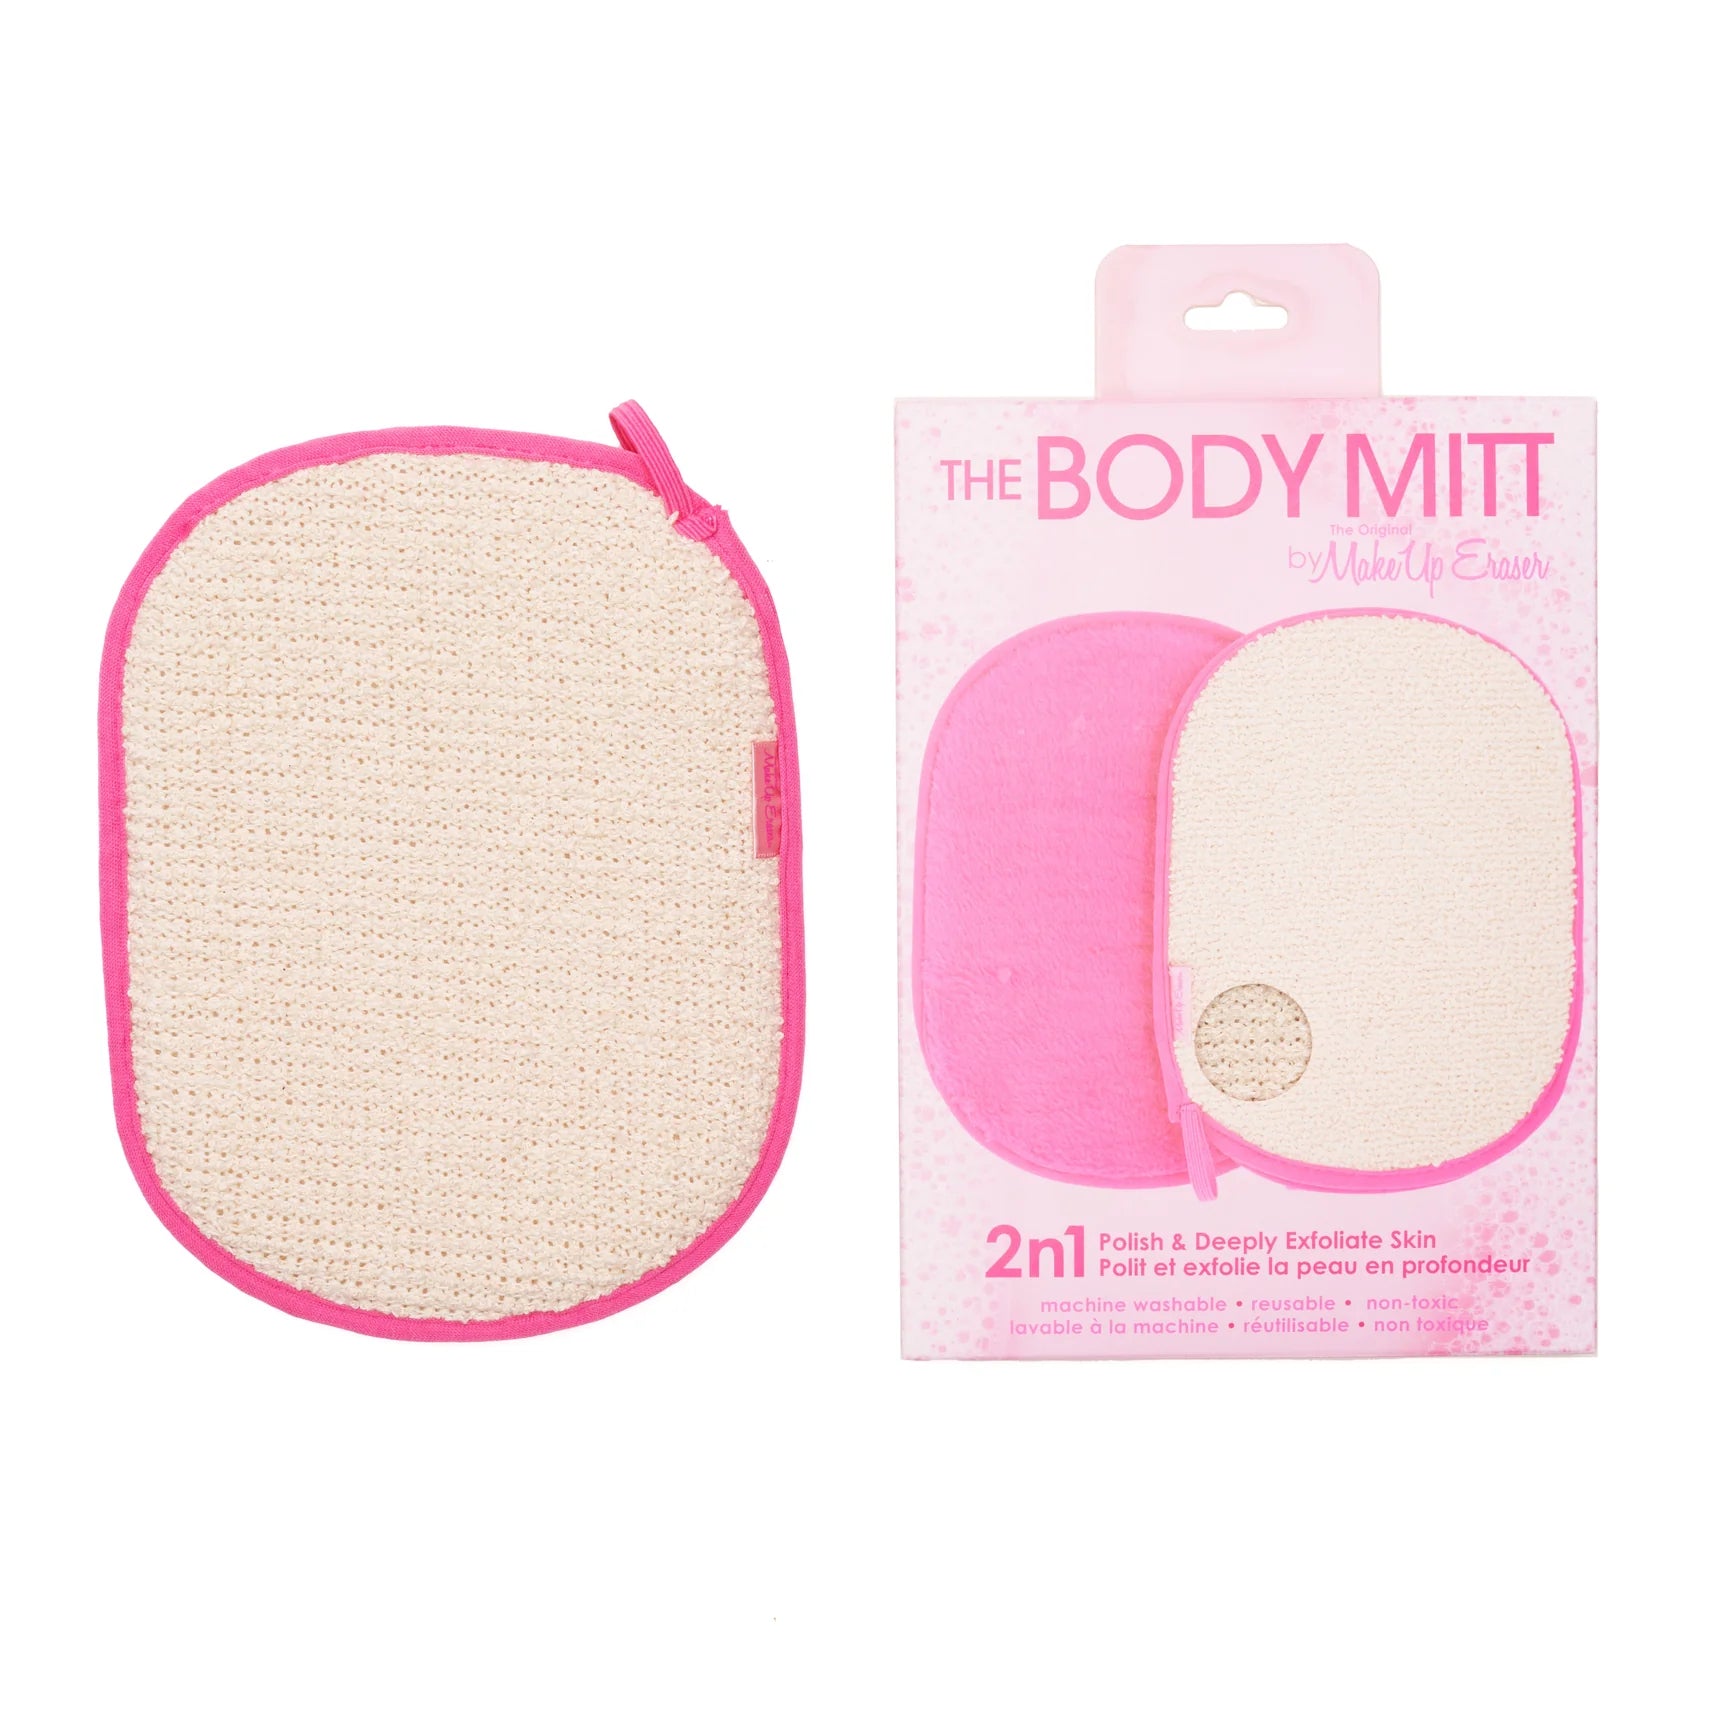 MakeUp Eraser - The Body MITT